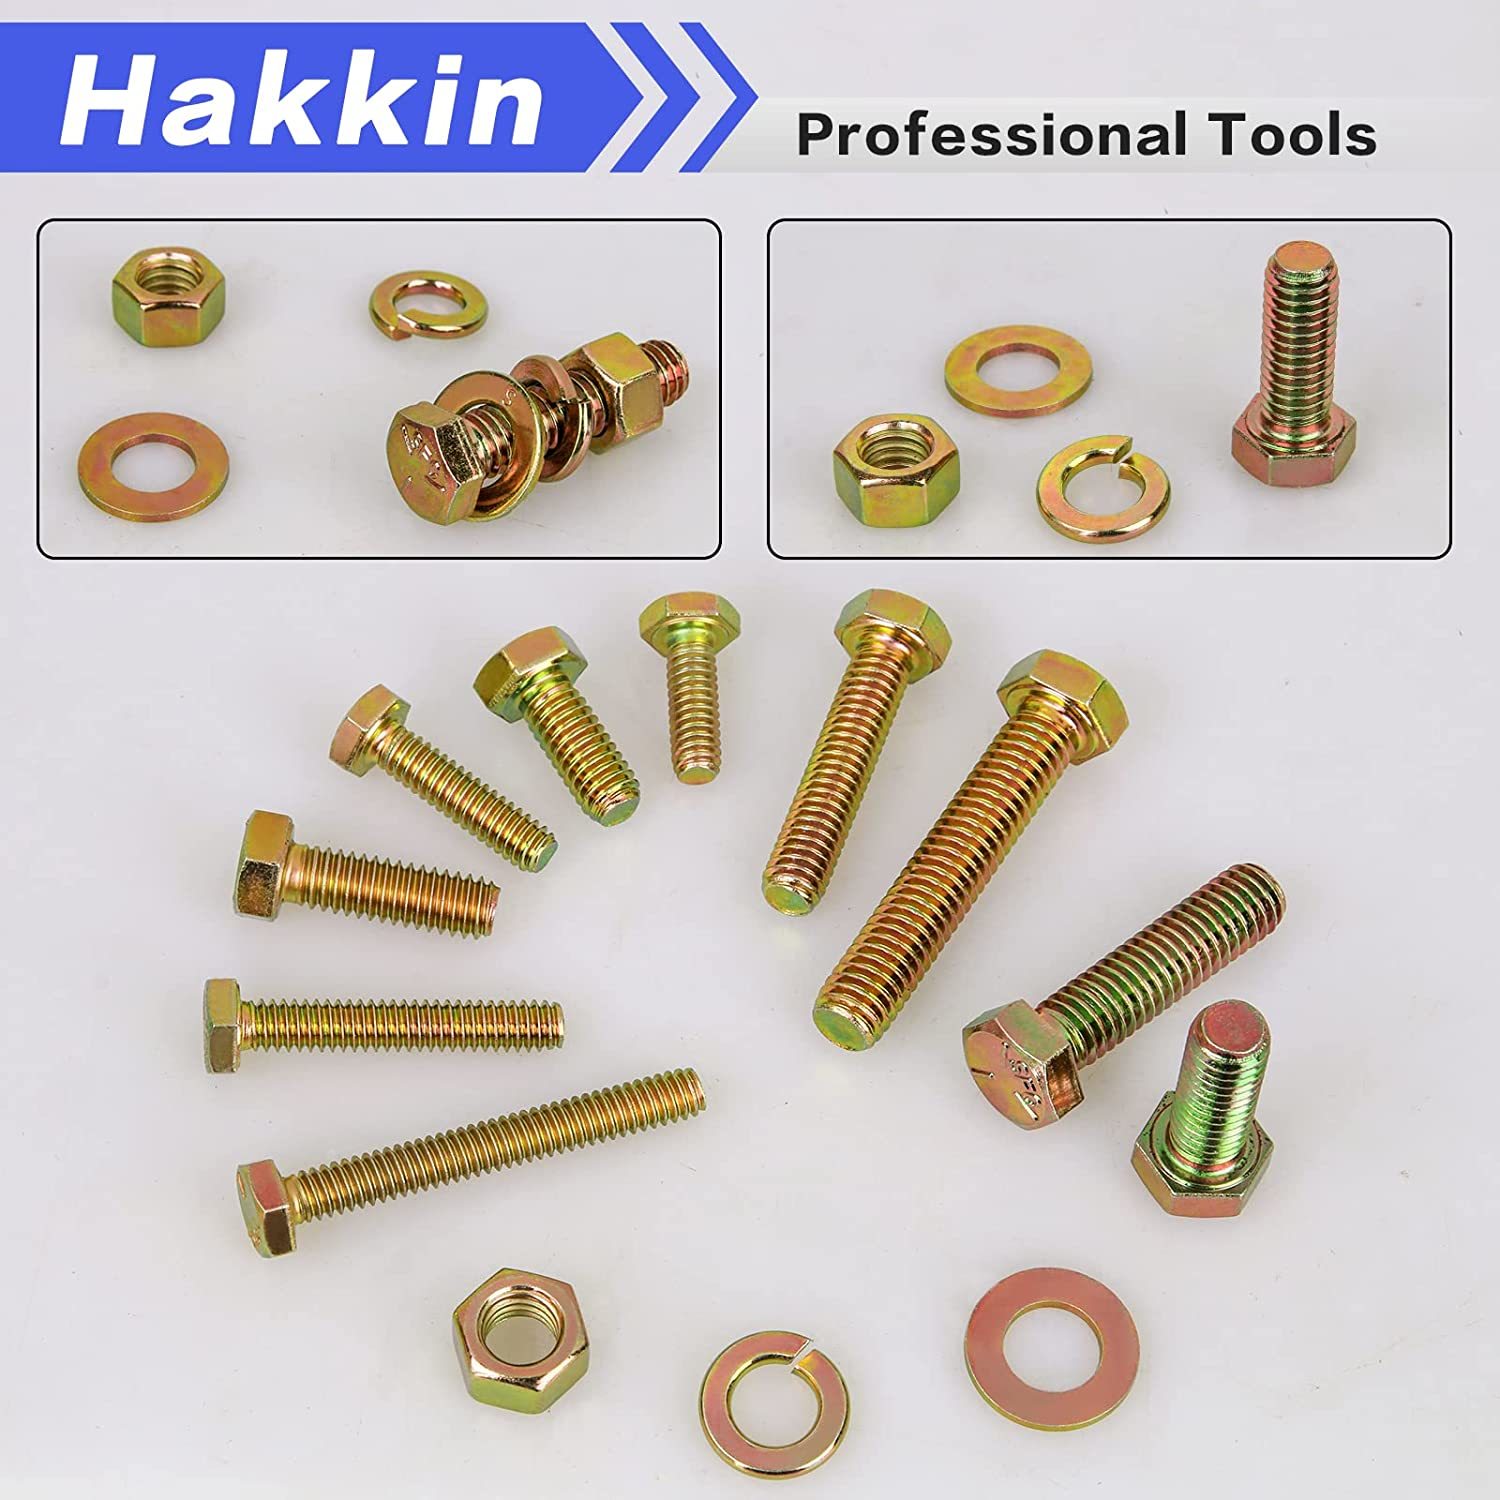 Hakkin 256PCS Bolts and Nuts Assortment Kit, and similar items